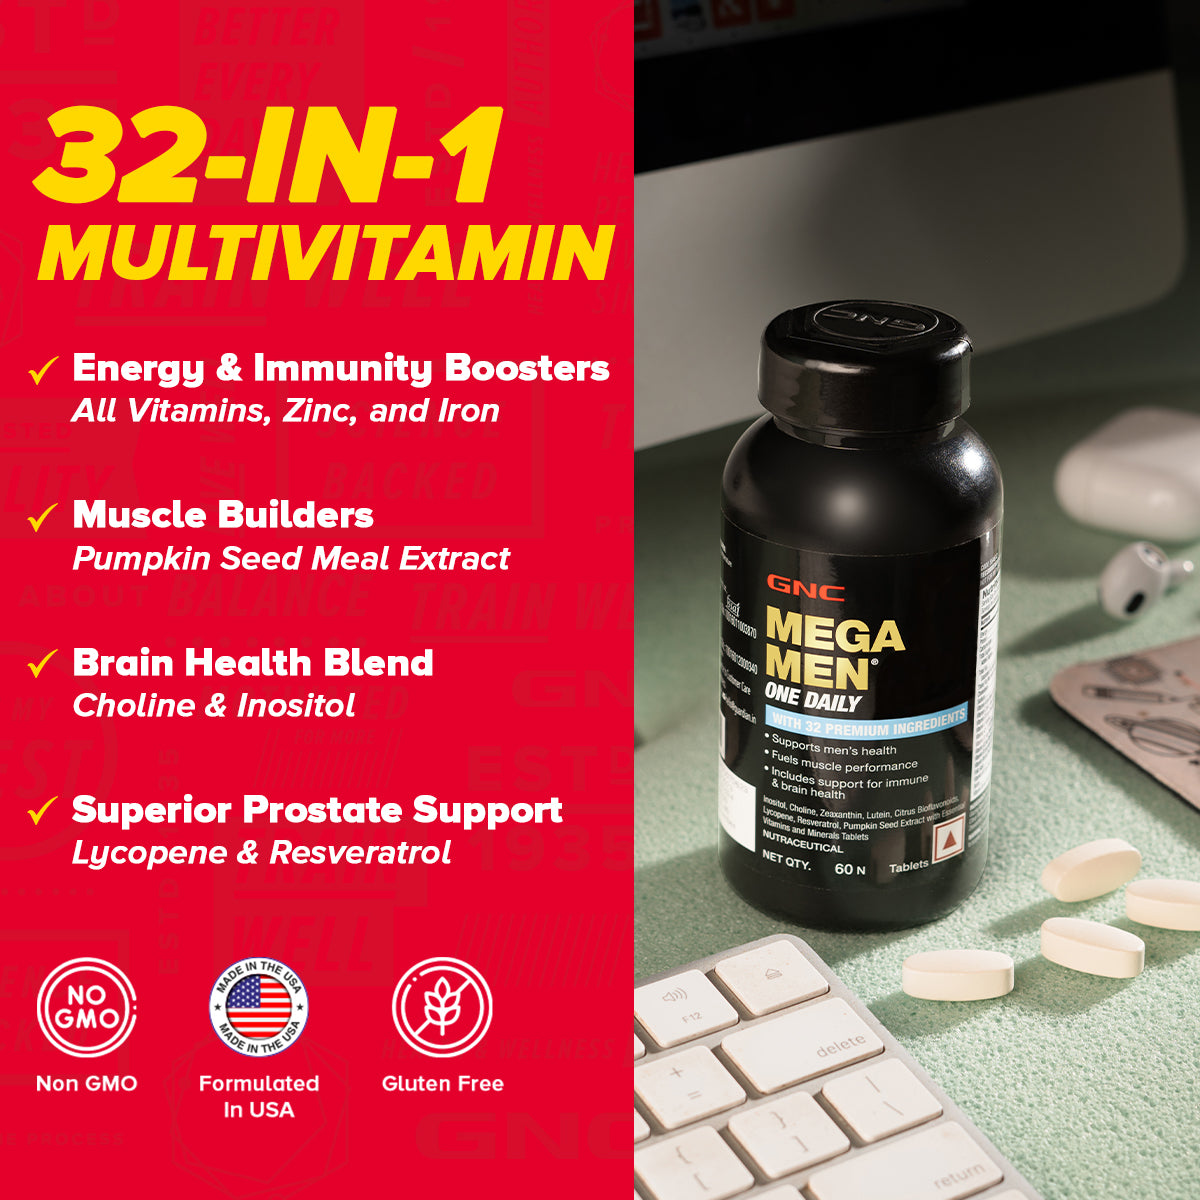 GNC Mega Men One Daily Multivitamin - Improves Energy, Immunity & Overall Health